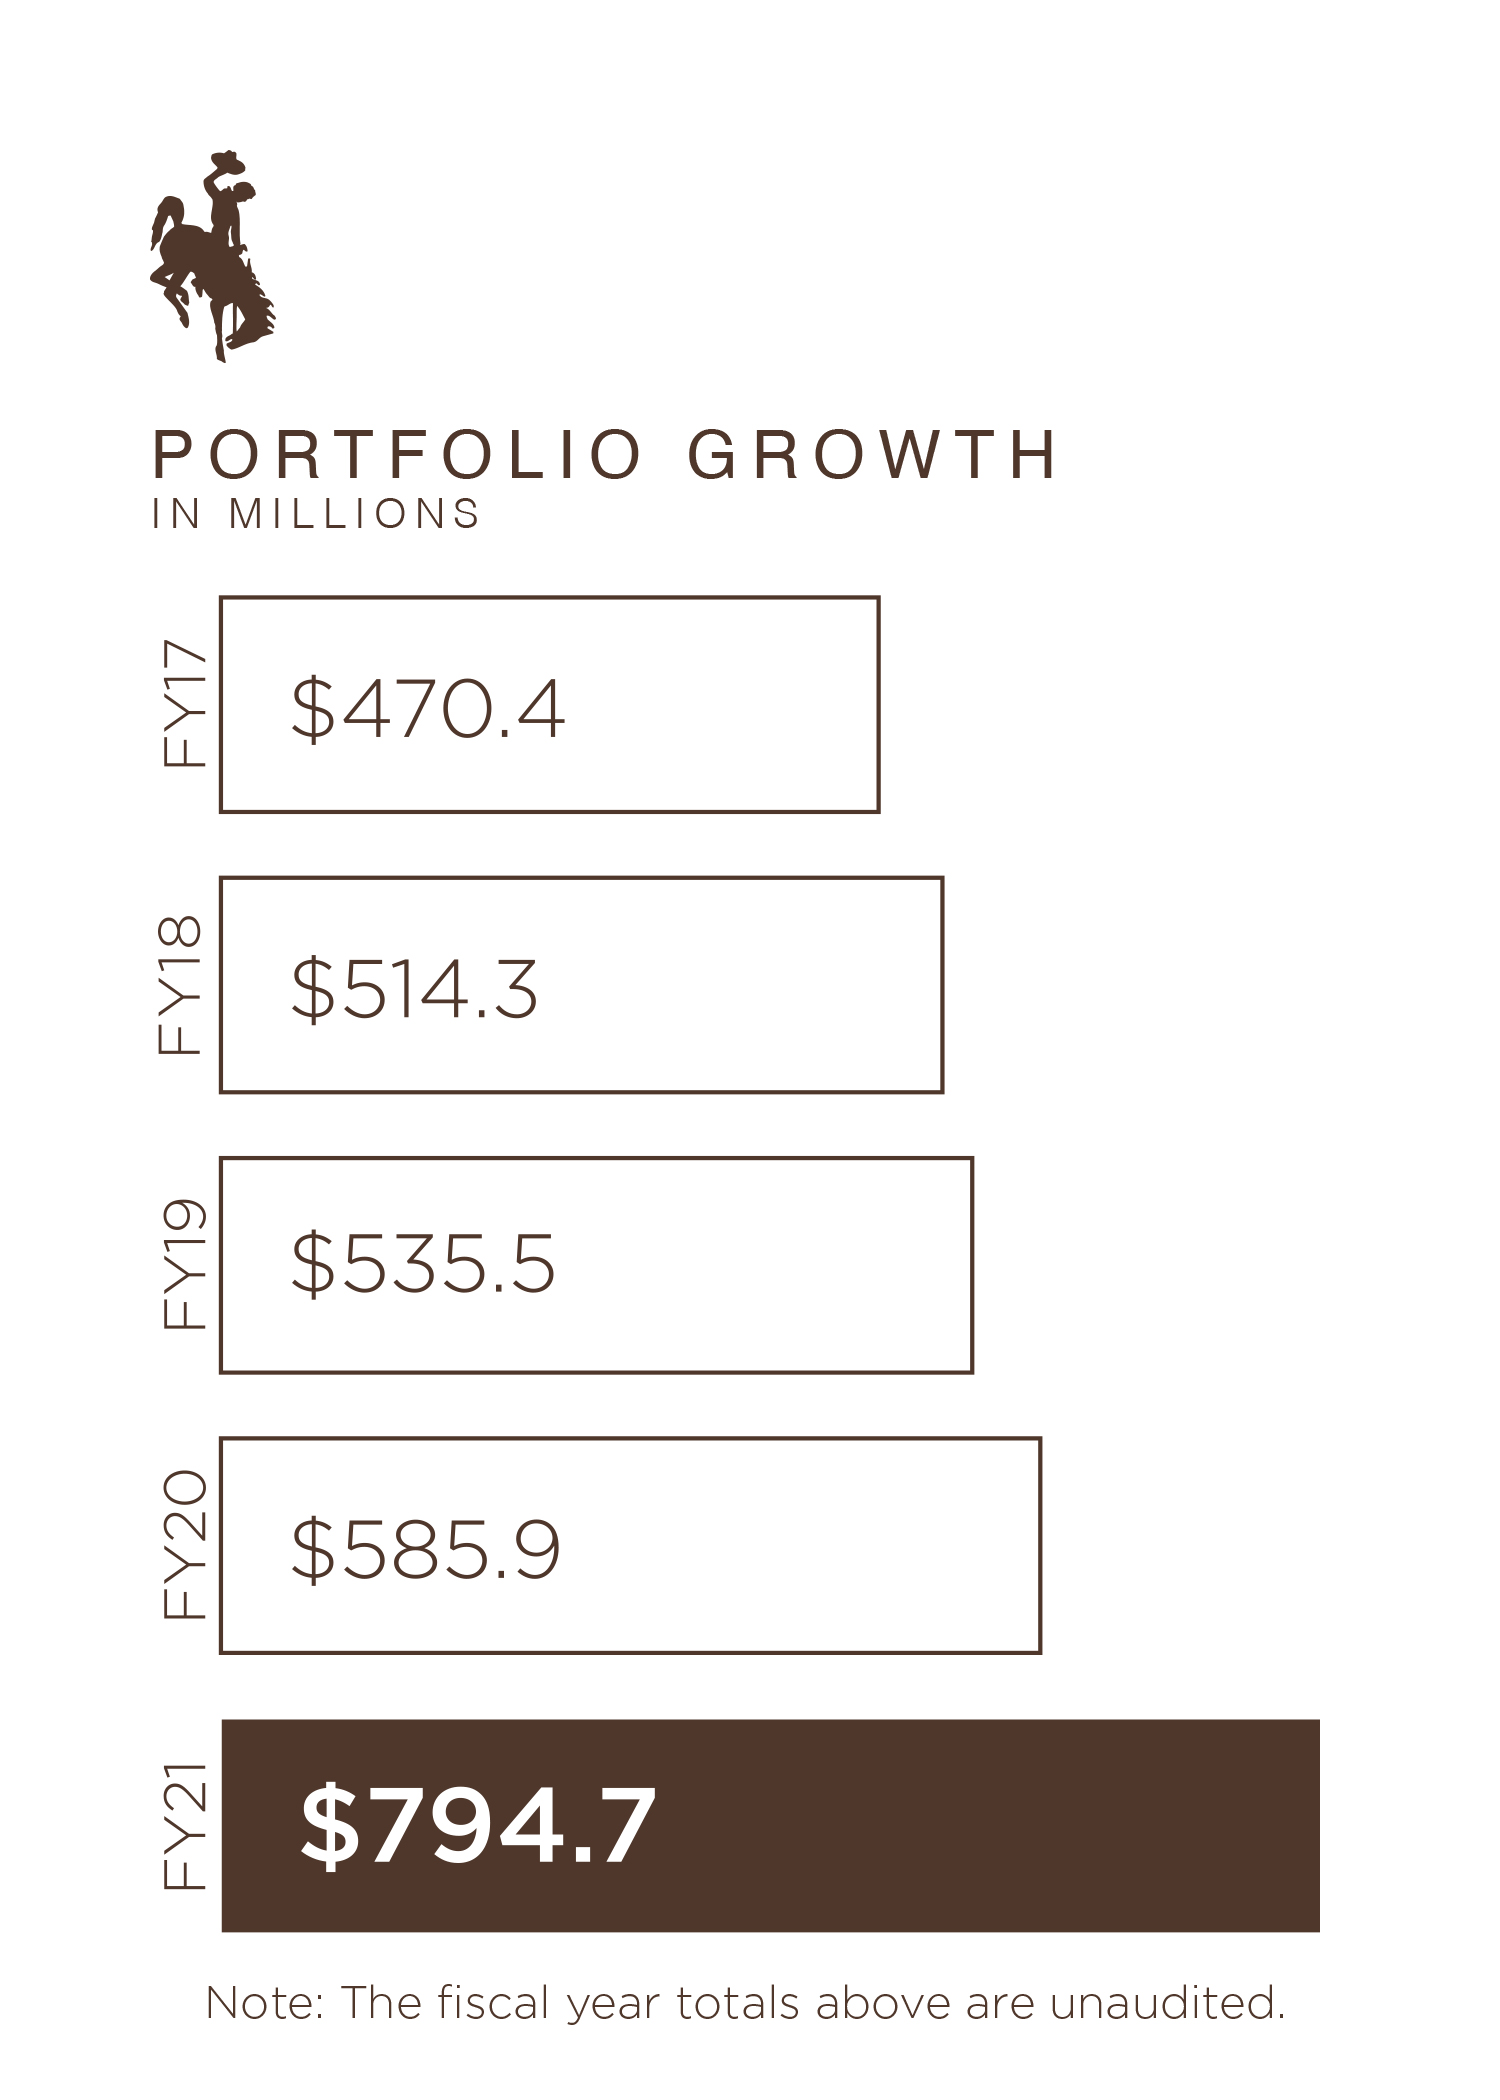 Portfolio Growth in Millions